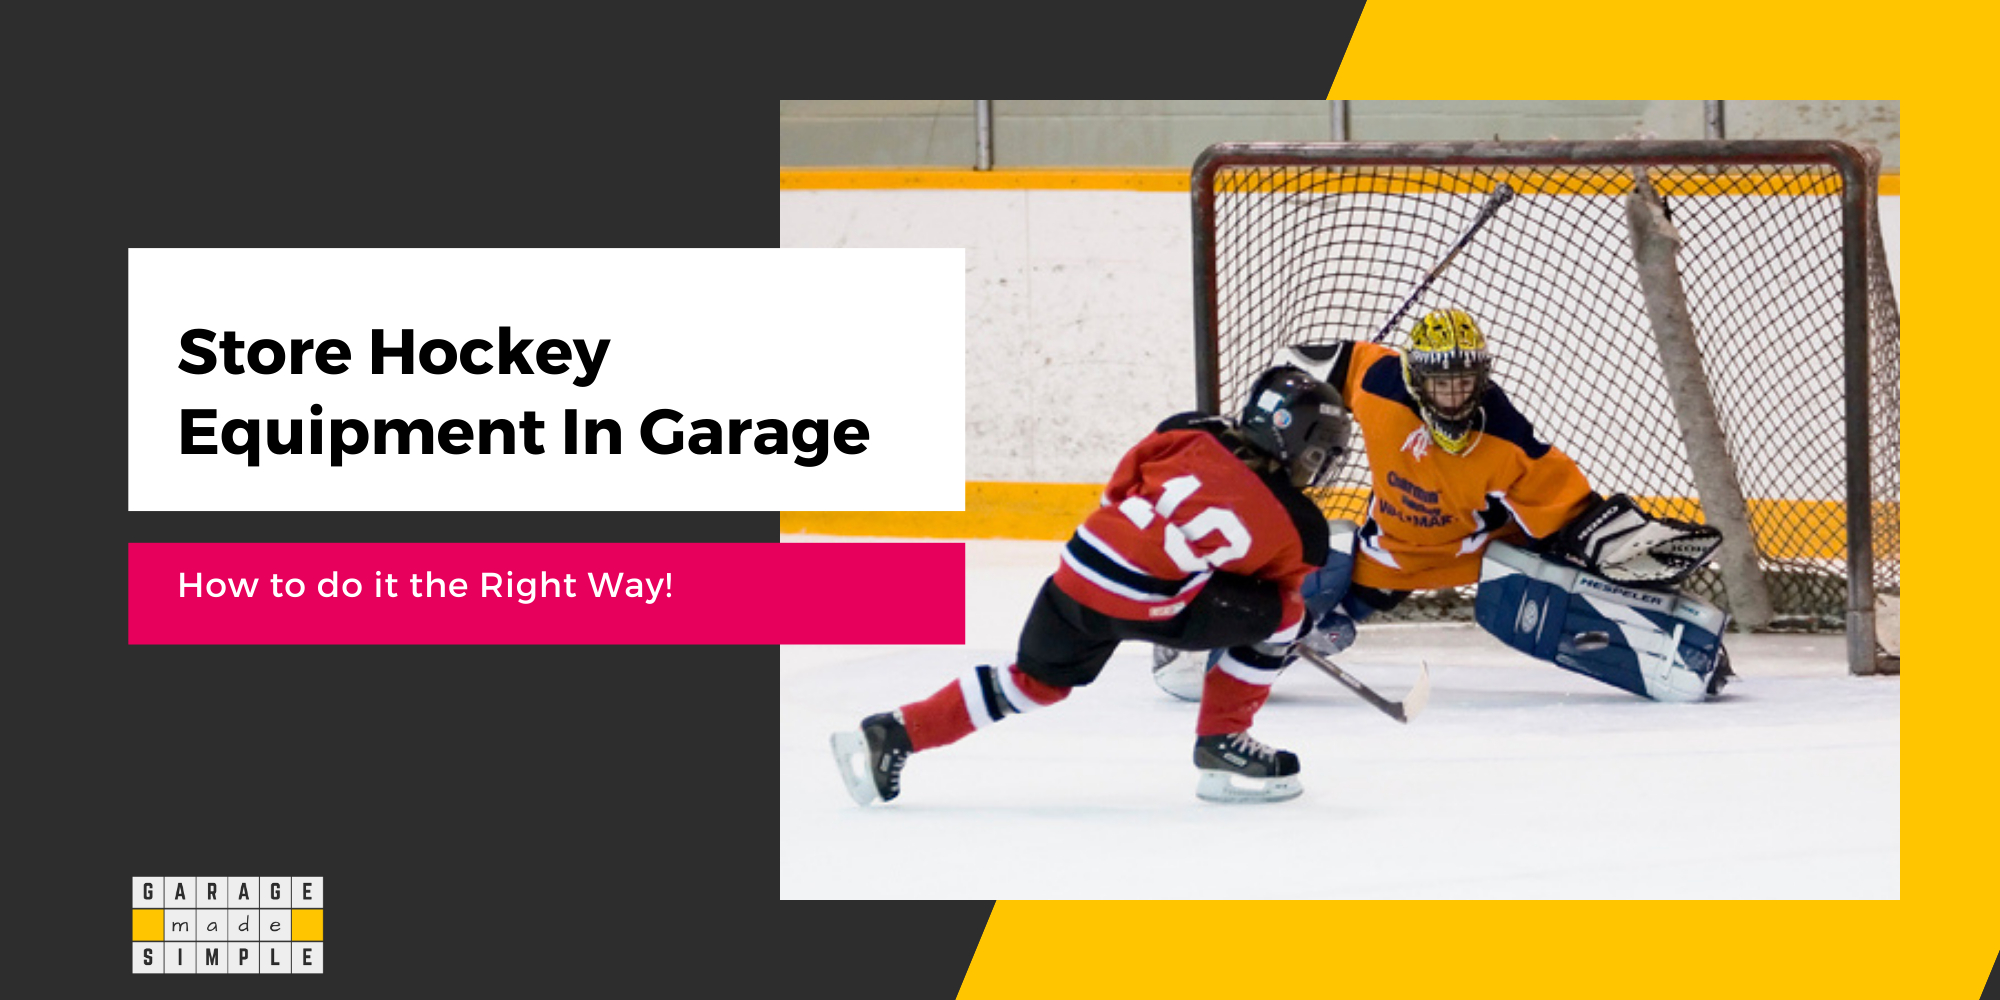 Store Hockey Gear In Garage - Feature Image